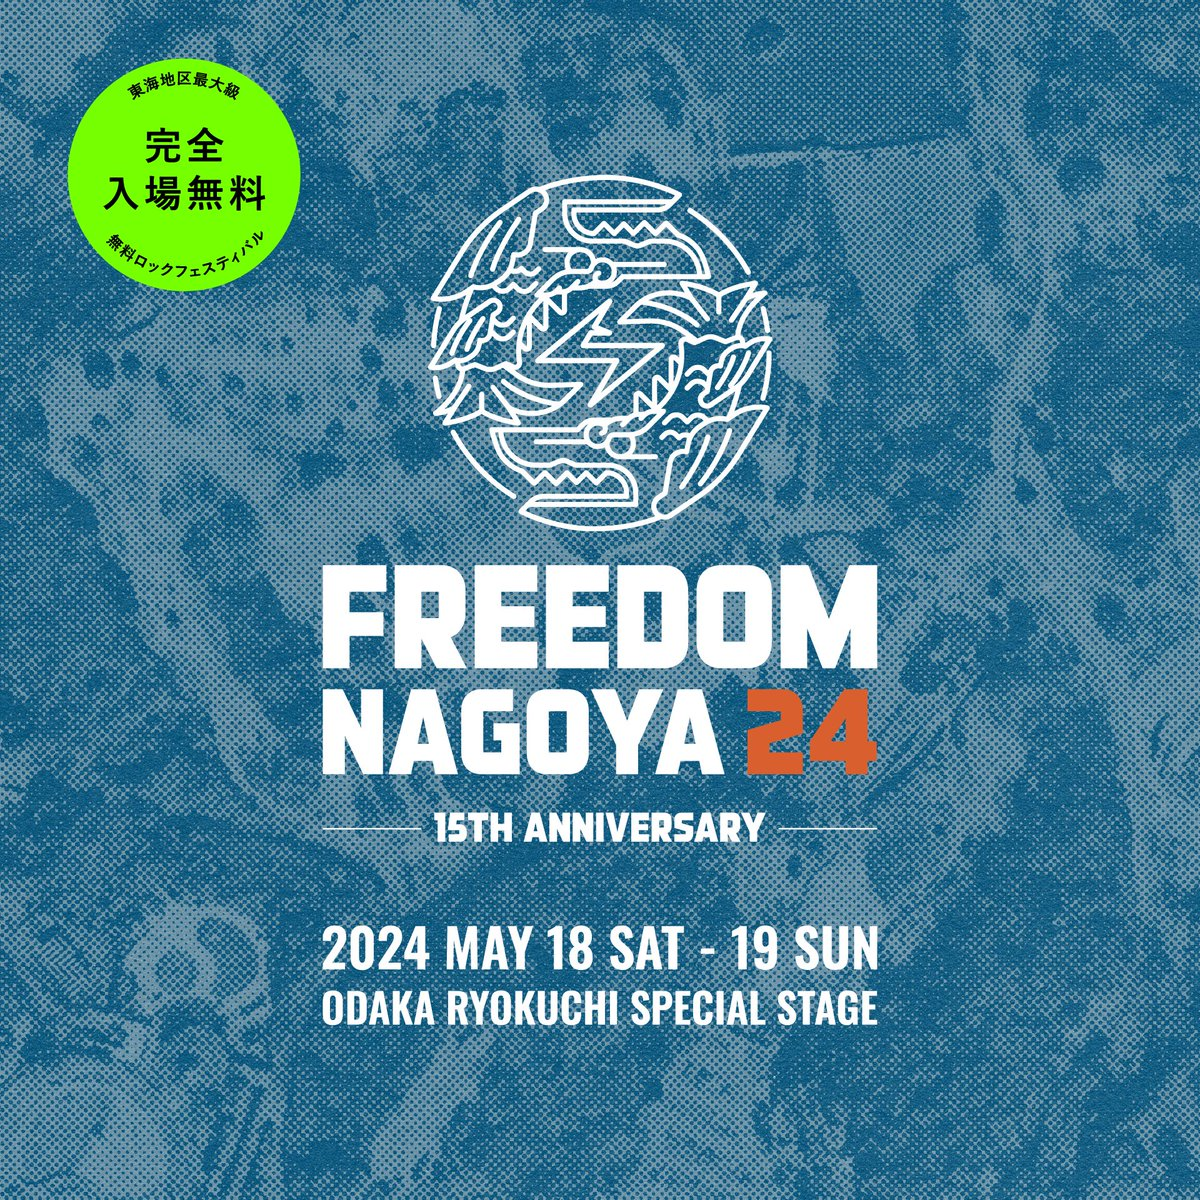 FREEDOM NAGOYA 2024 -15th Anniversary-